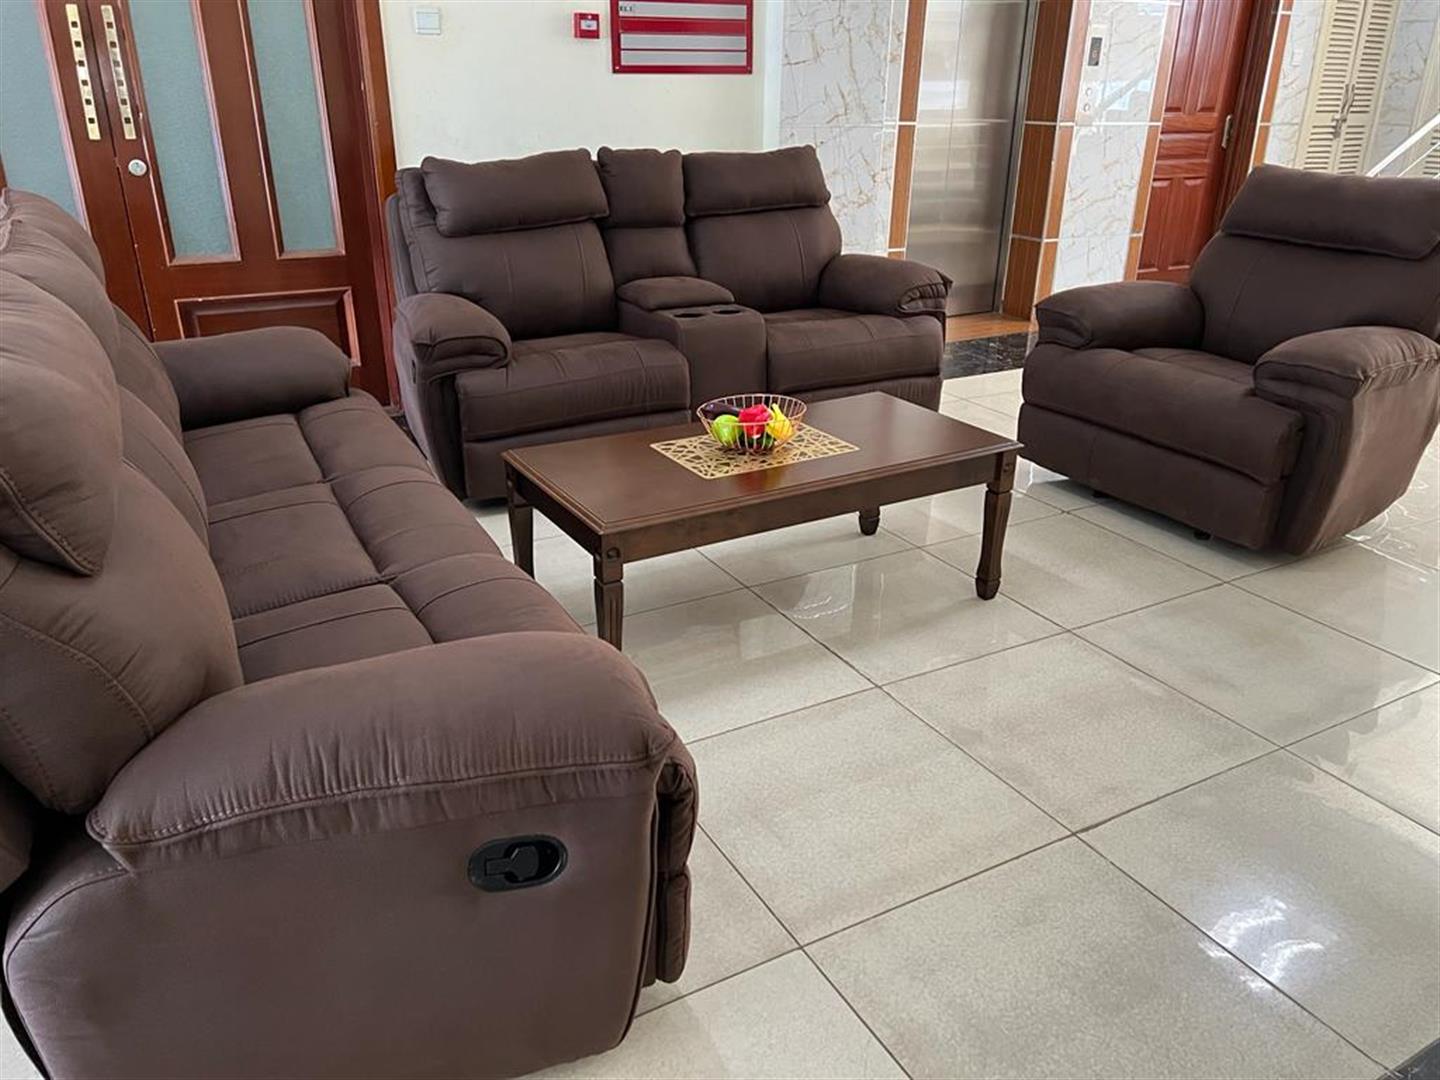 Alma+ Chocolate Brown Recliner Sofa Set - 6 Seater